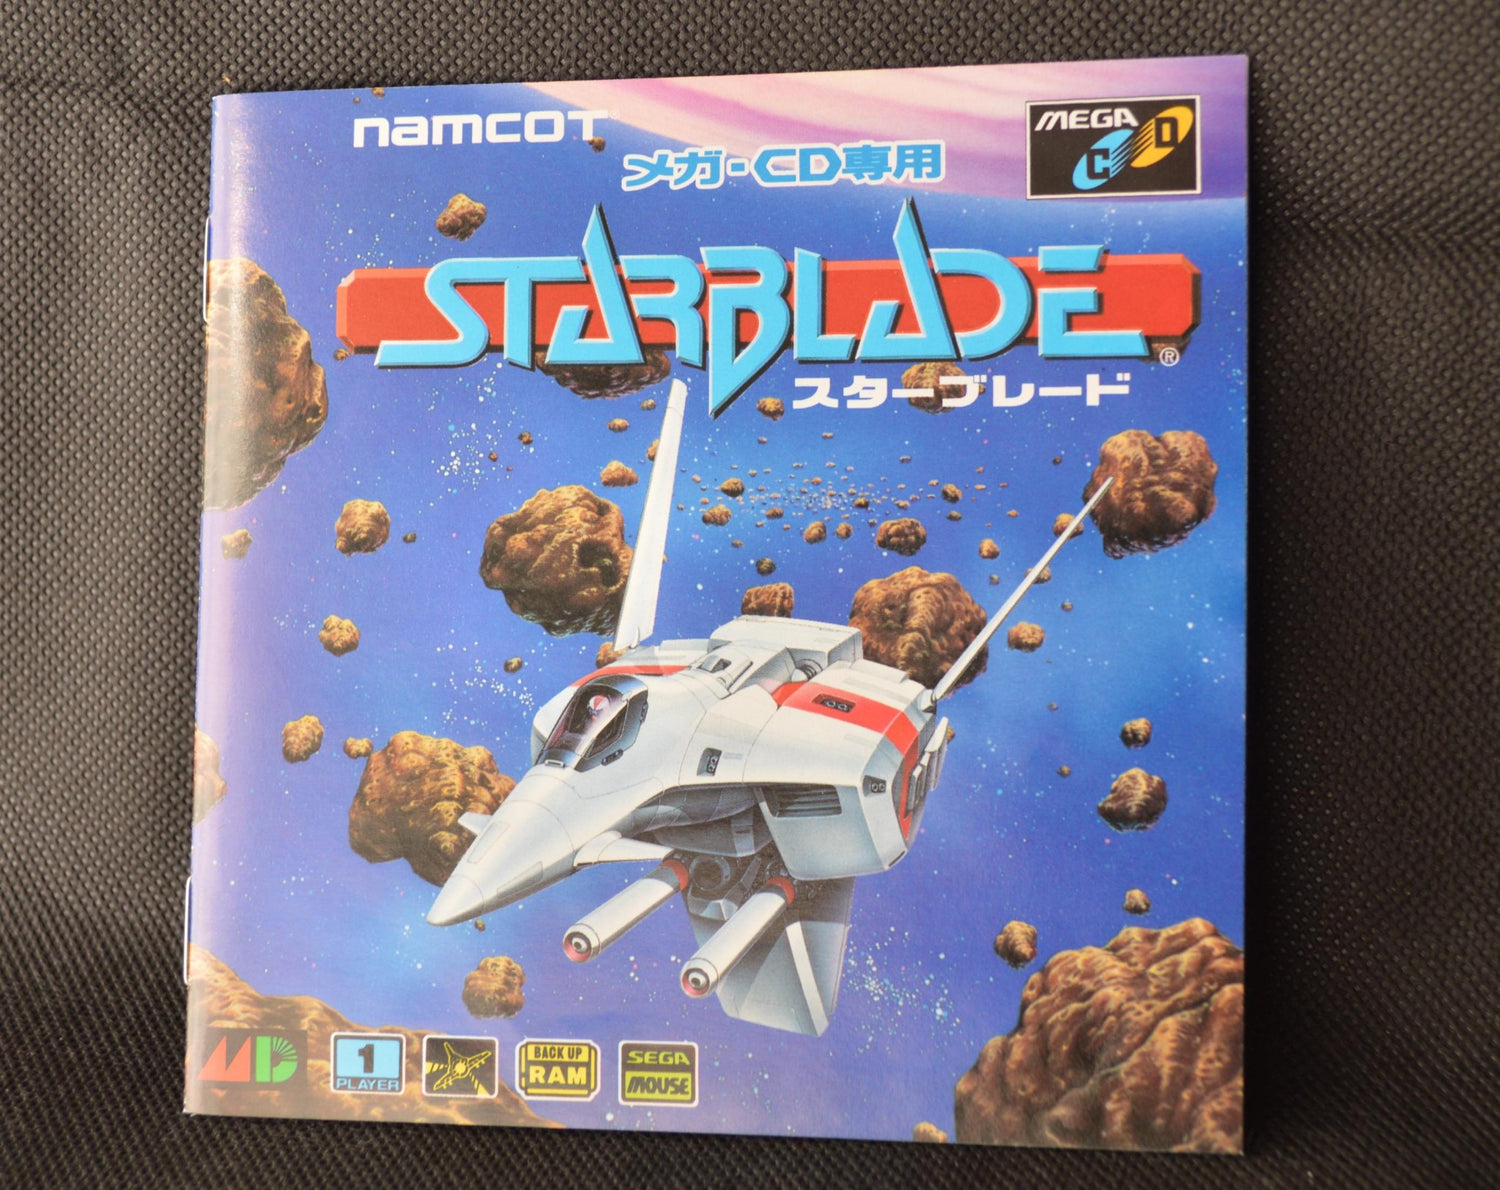 STAR BLADE MEGA CD MCD game Disk, Manual, Box set, Working -f1114 